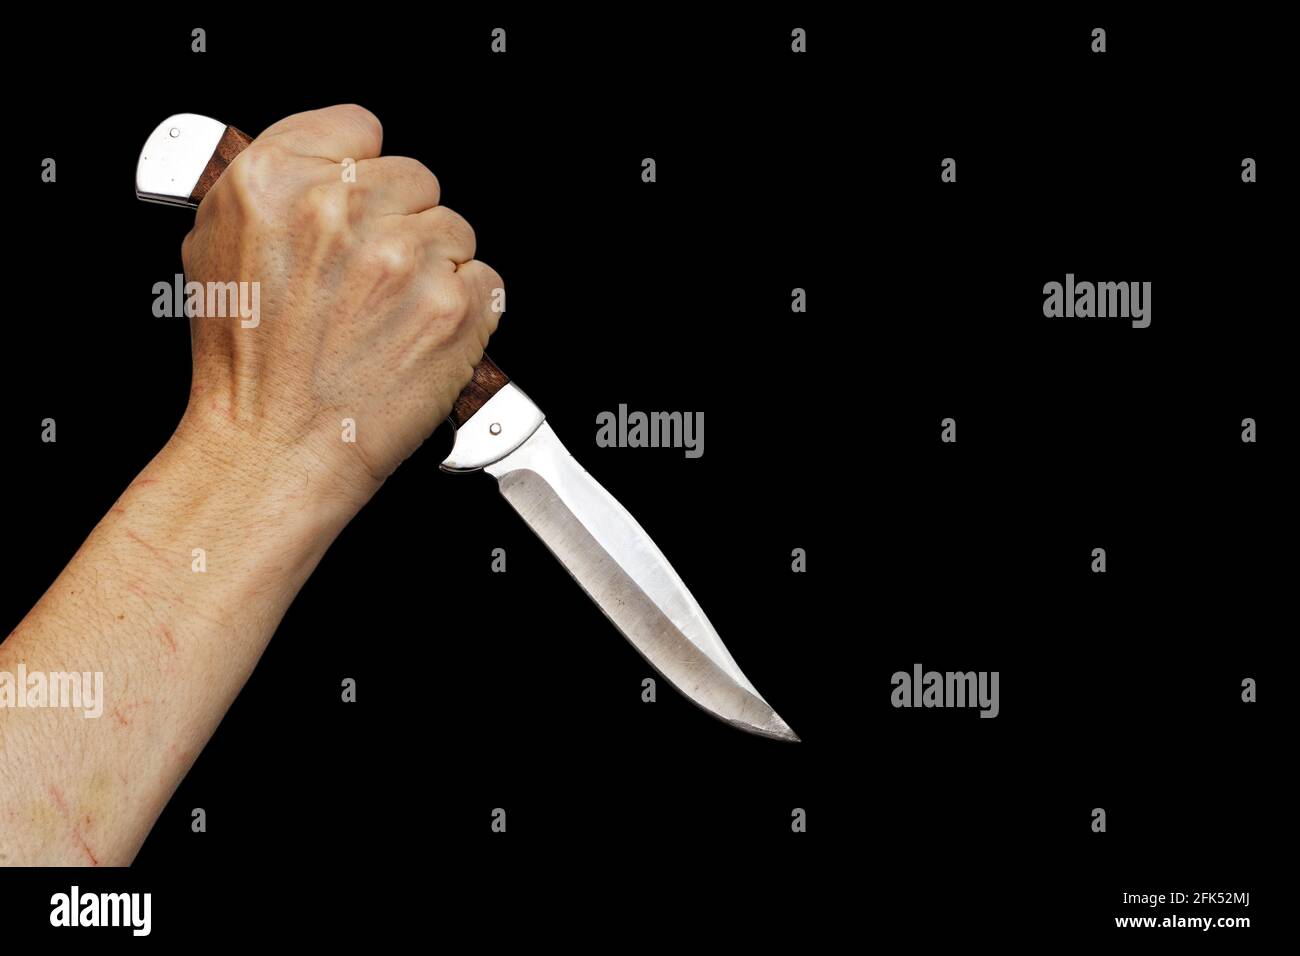 https://c8.alamy.com/comp/2FK52MJ/human-hand-holding-knife-isolated-on-black-copyspace-2FK52MJ.jpg